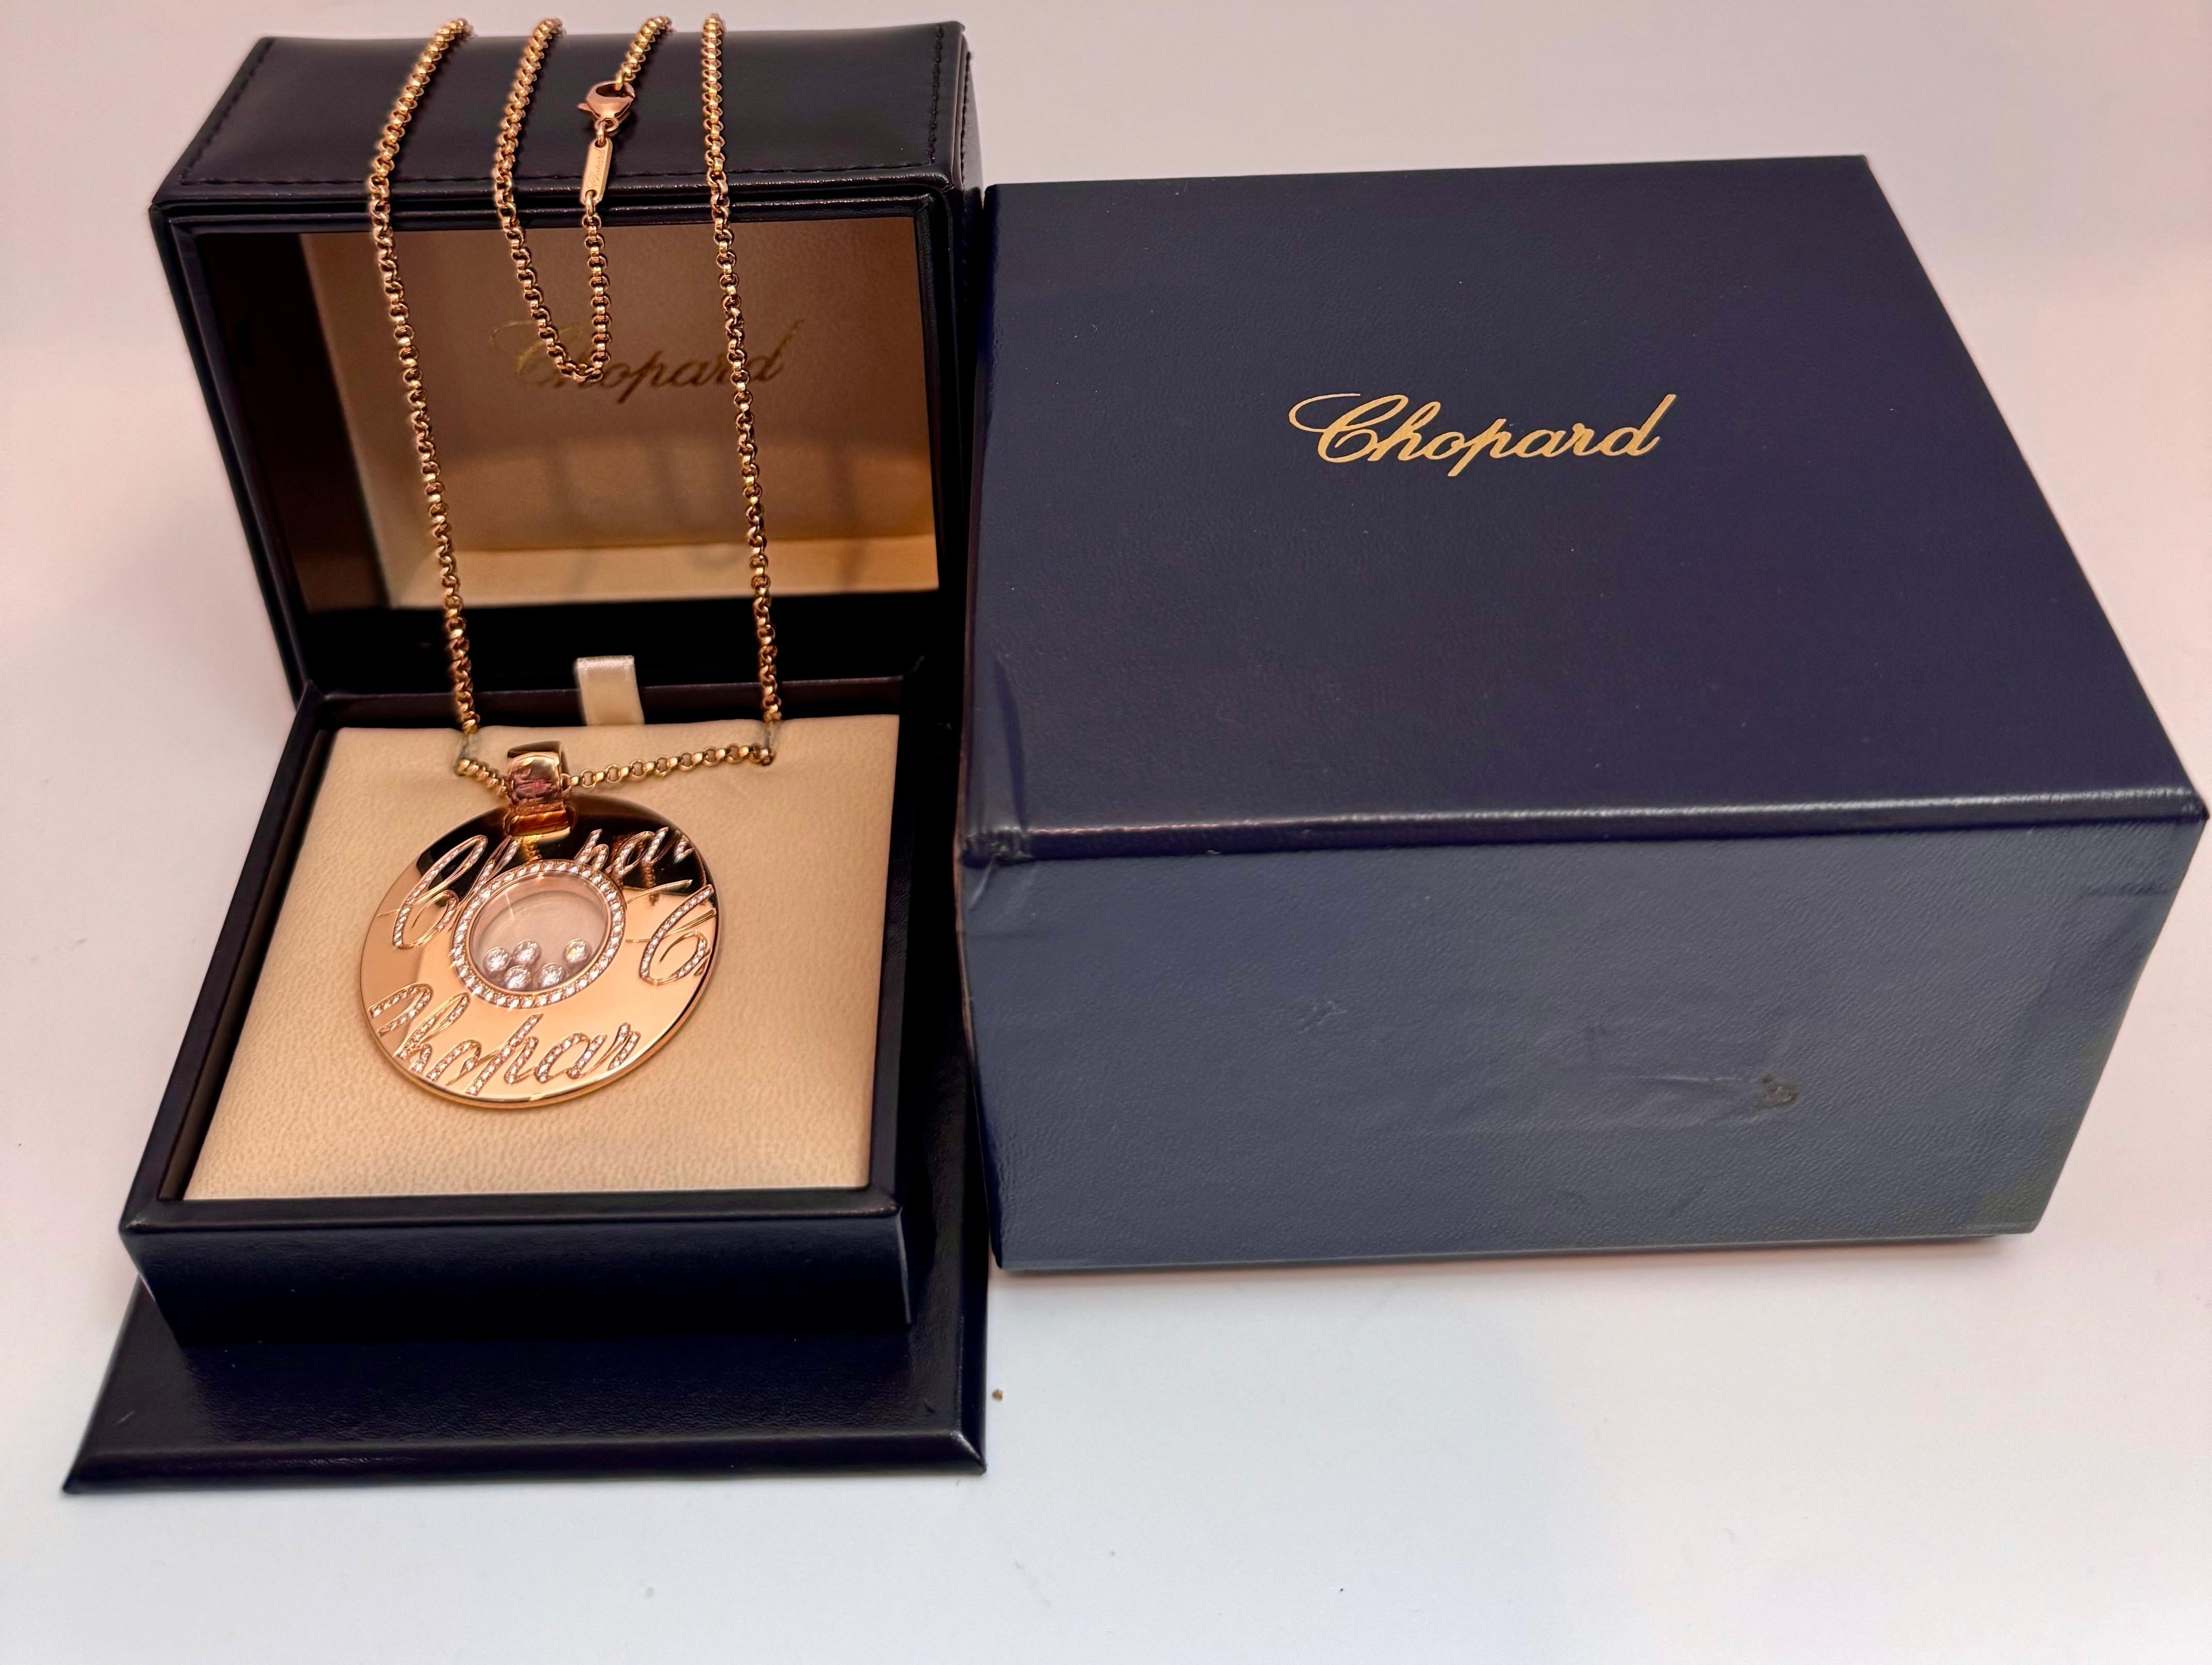 Chopard Chopardissimo 18Karat Yellow Gold Diamond Pendant Necklace Large, Estate For Sale 12